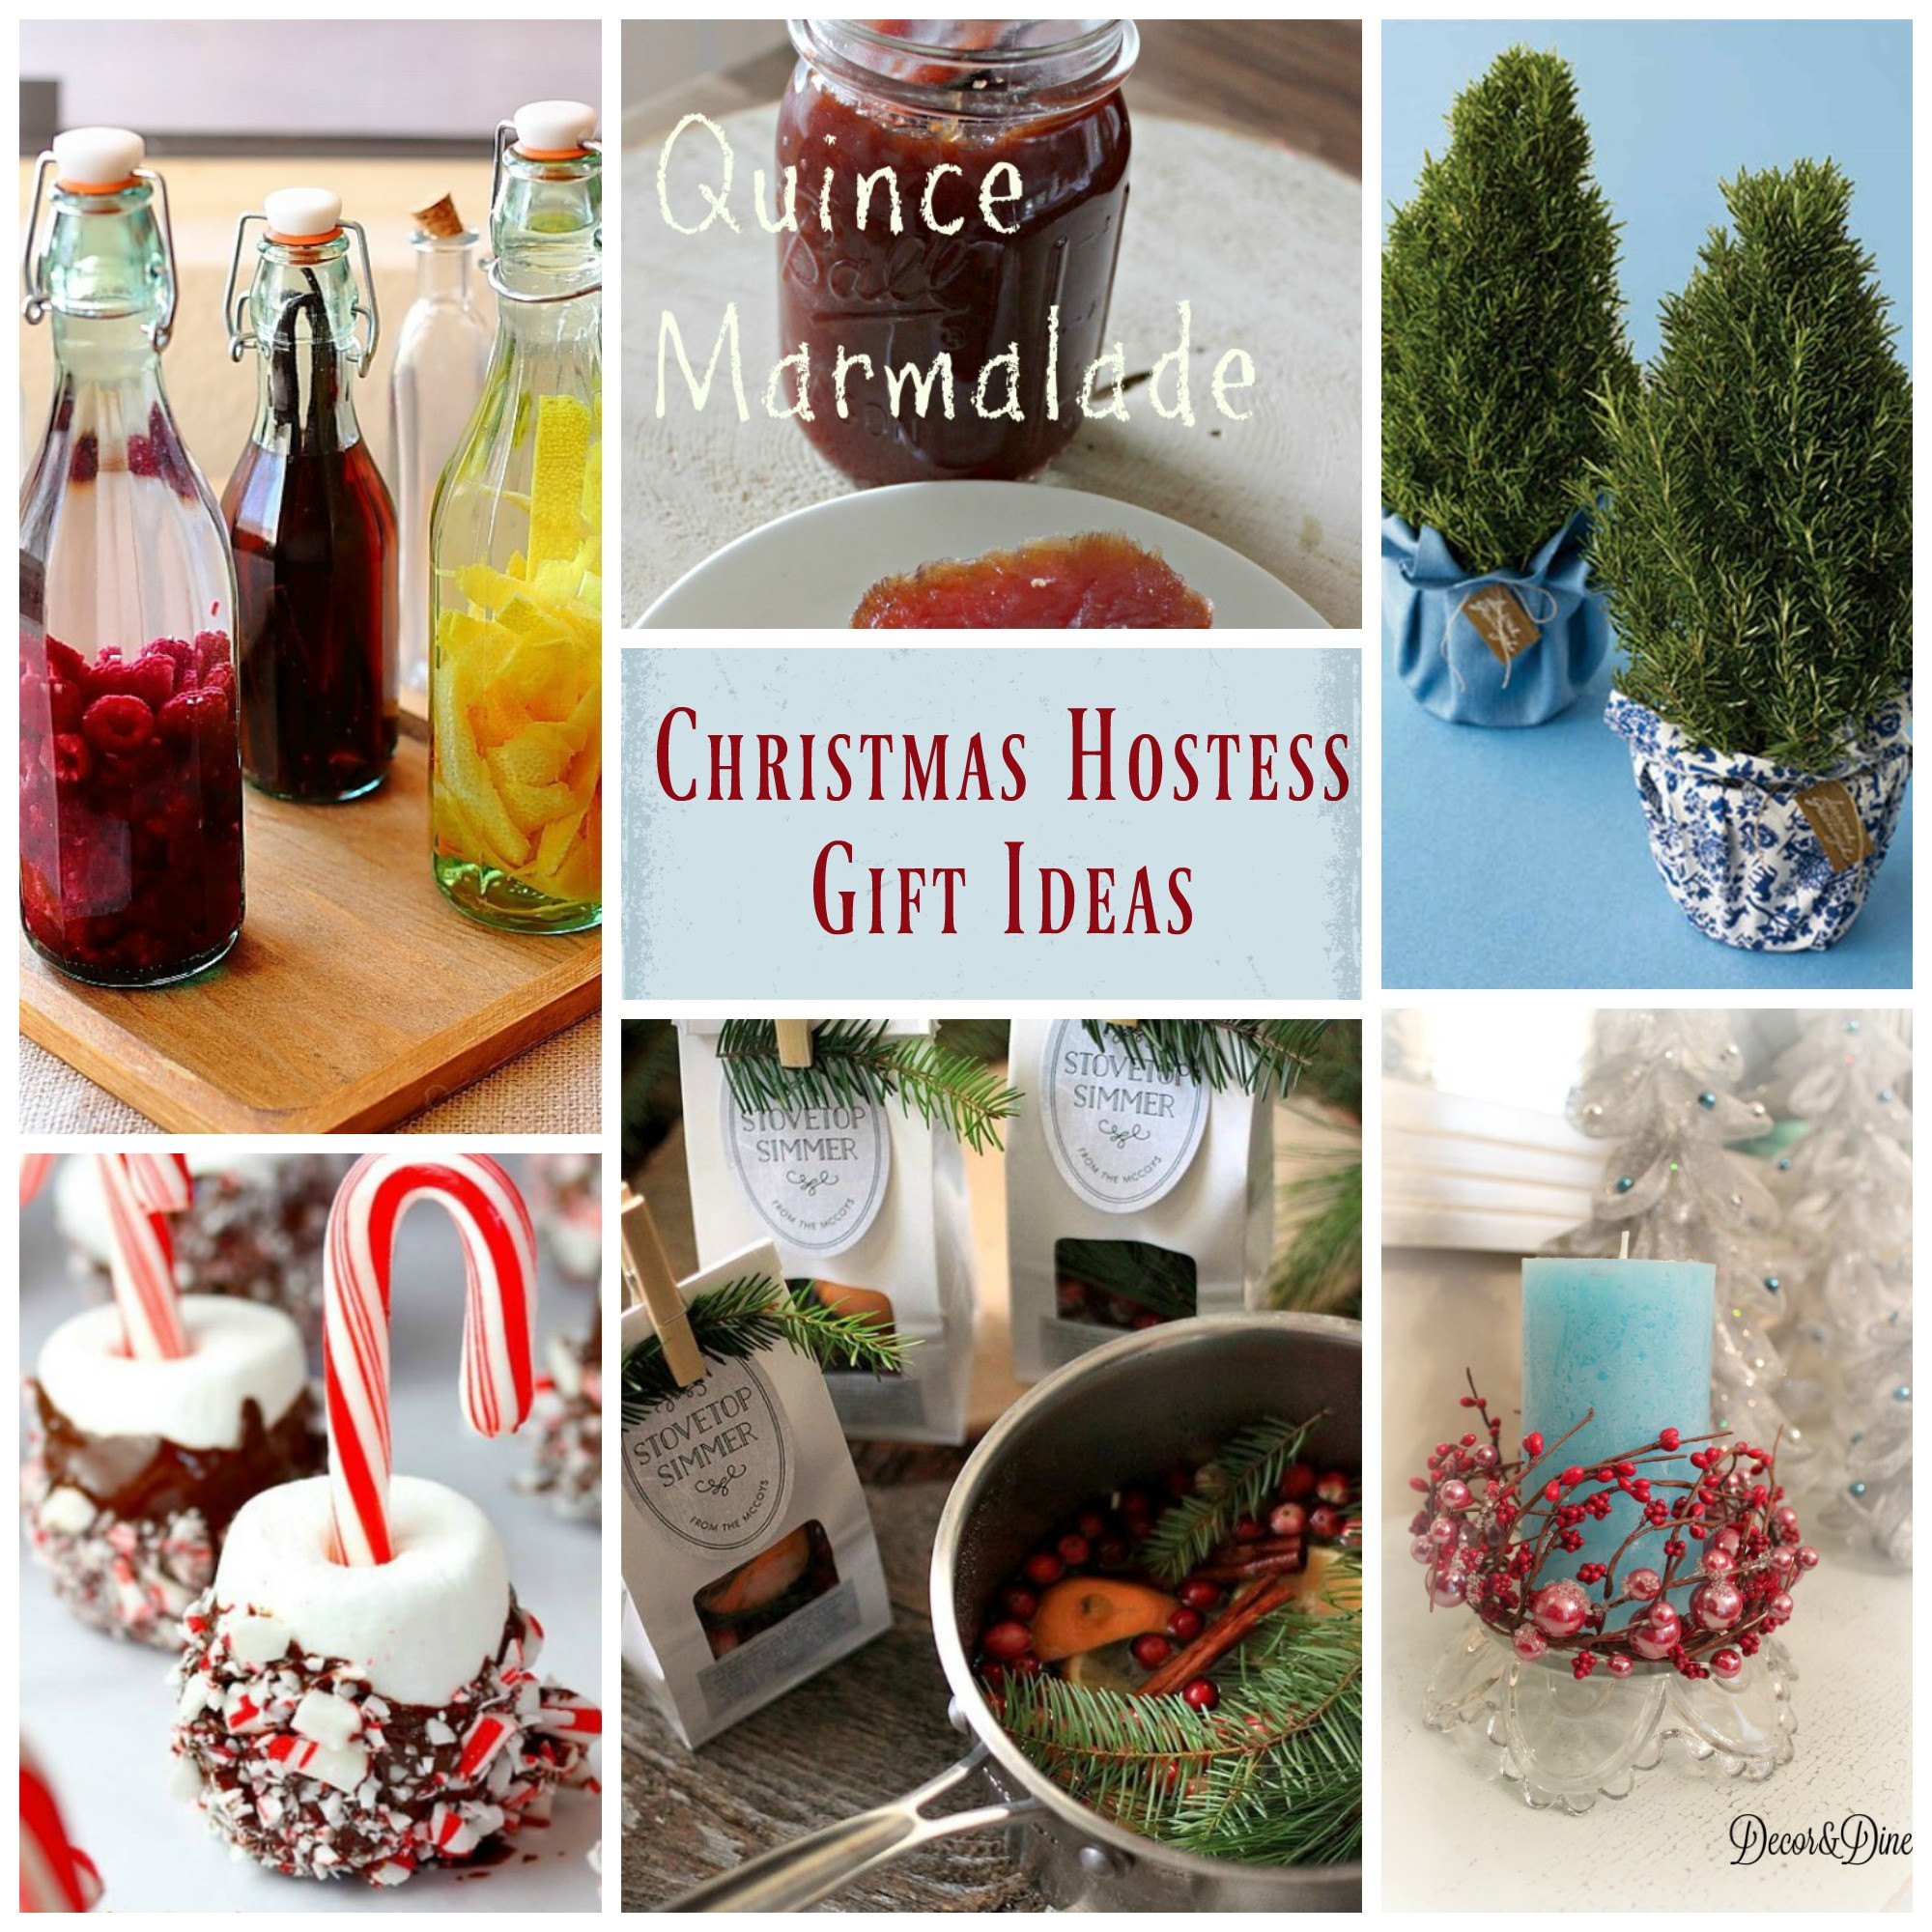 Hostess Gift Ideas For Holiday Party
 Christmas Hostess Gift Ideas